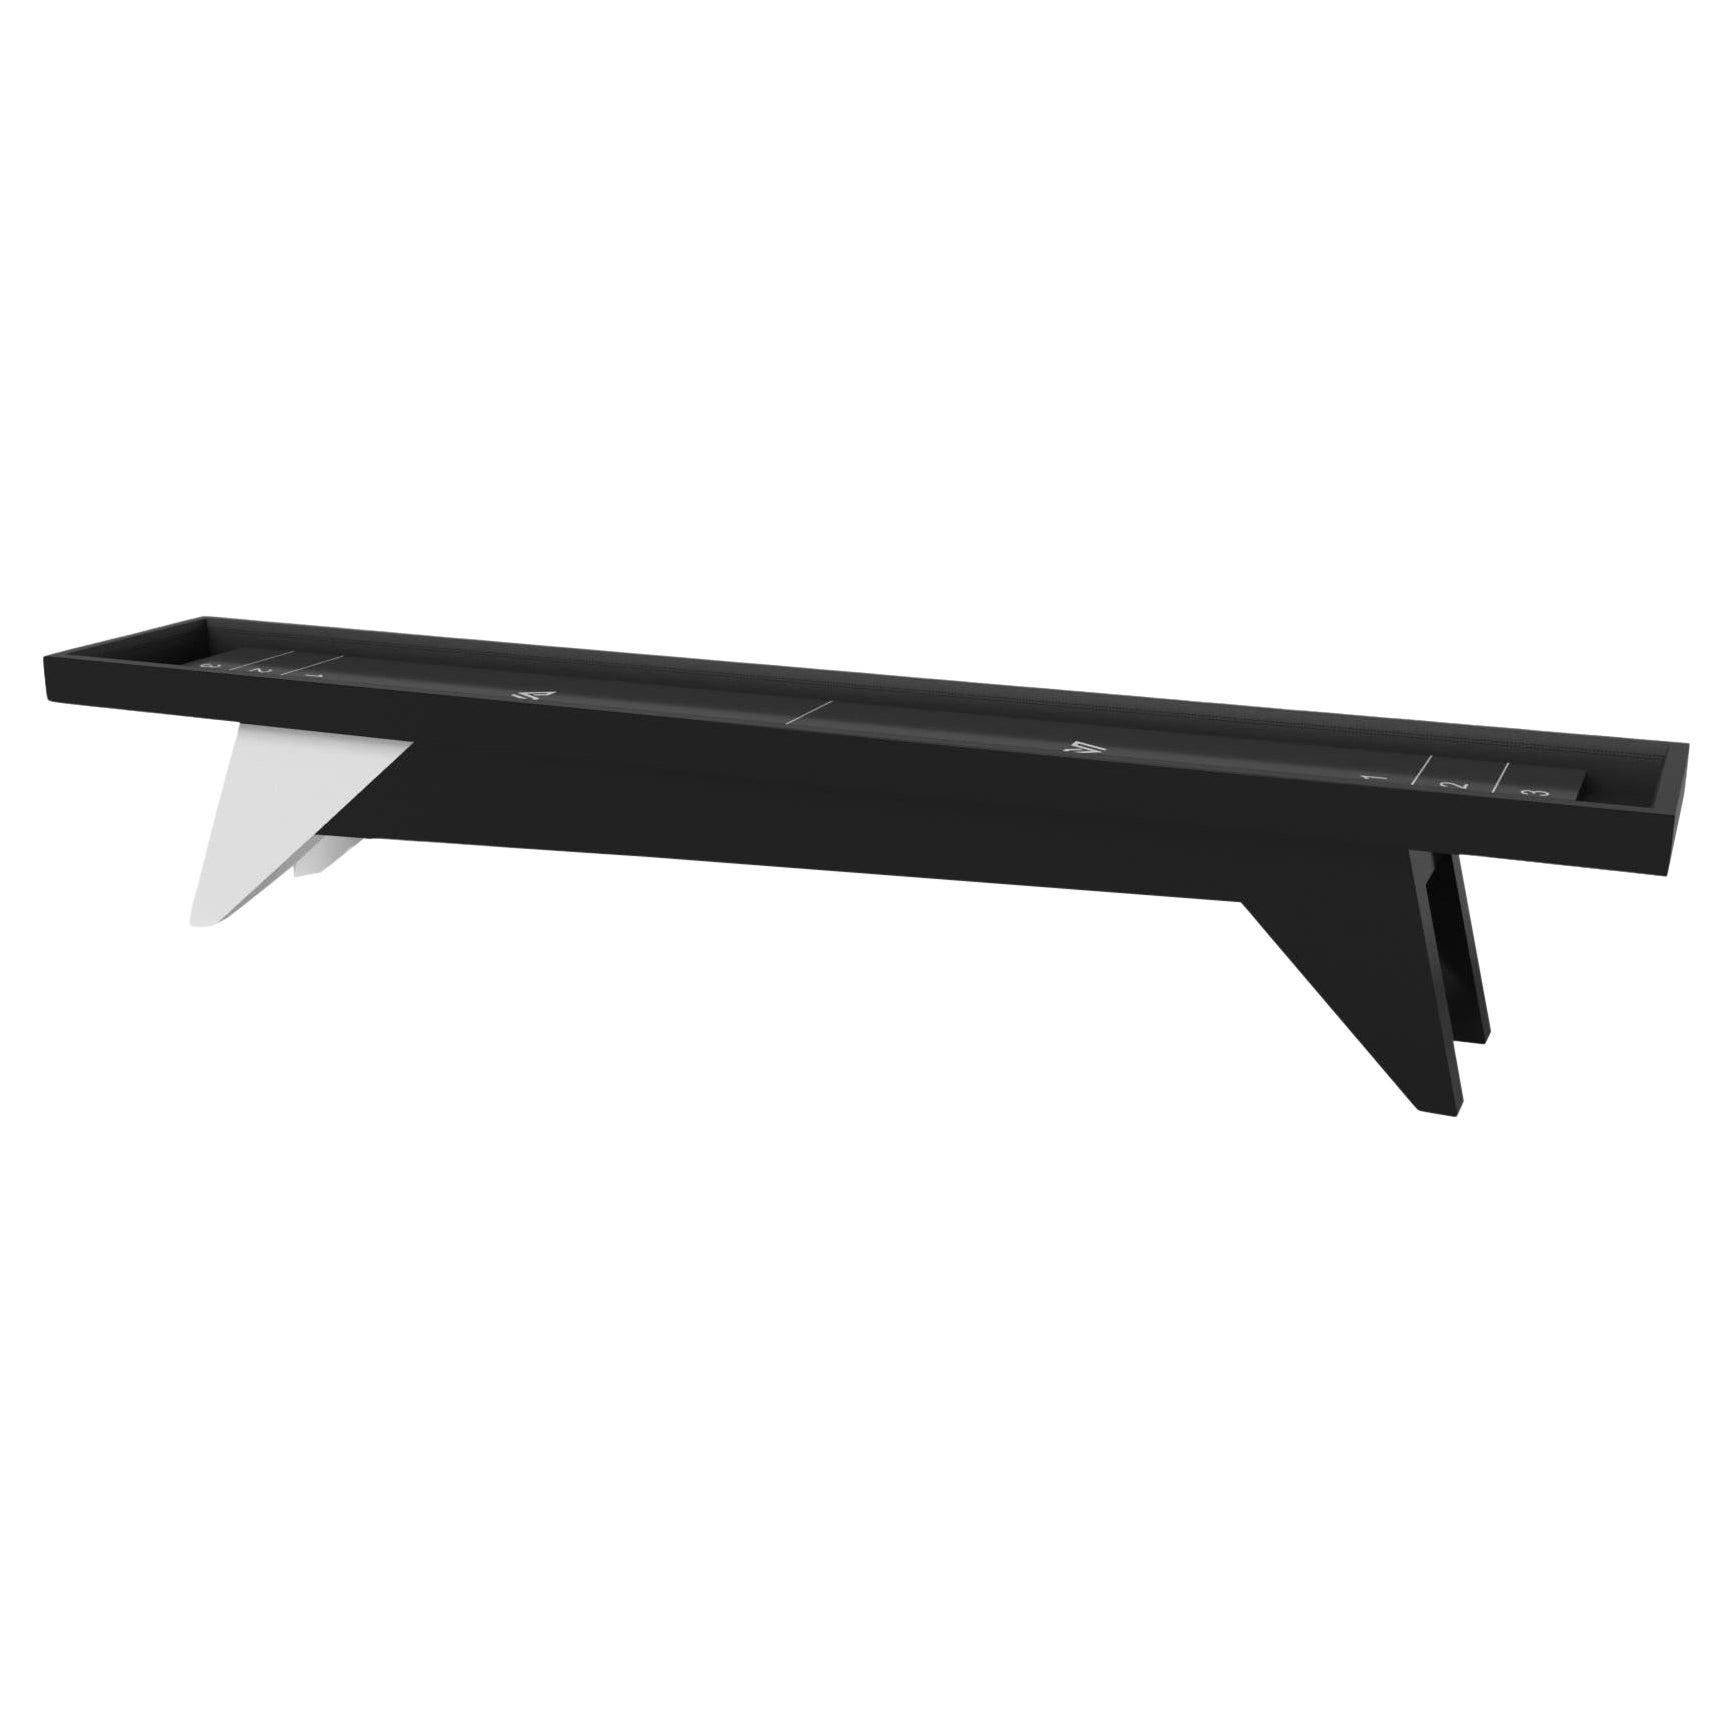 Elevate Customs Mantis Shuffleboard Tables /Solid Pantone Black Color in 18'-USA